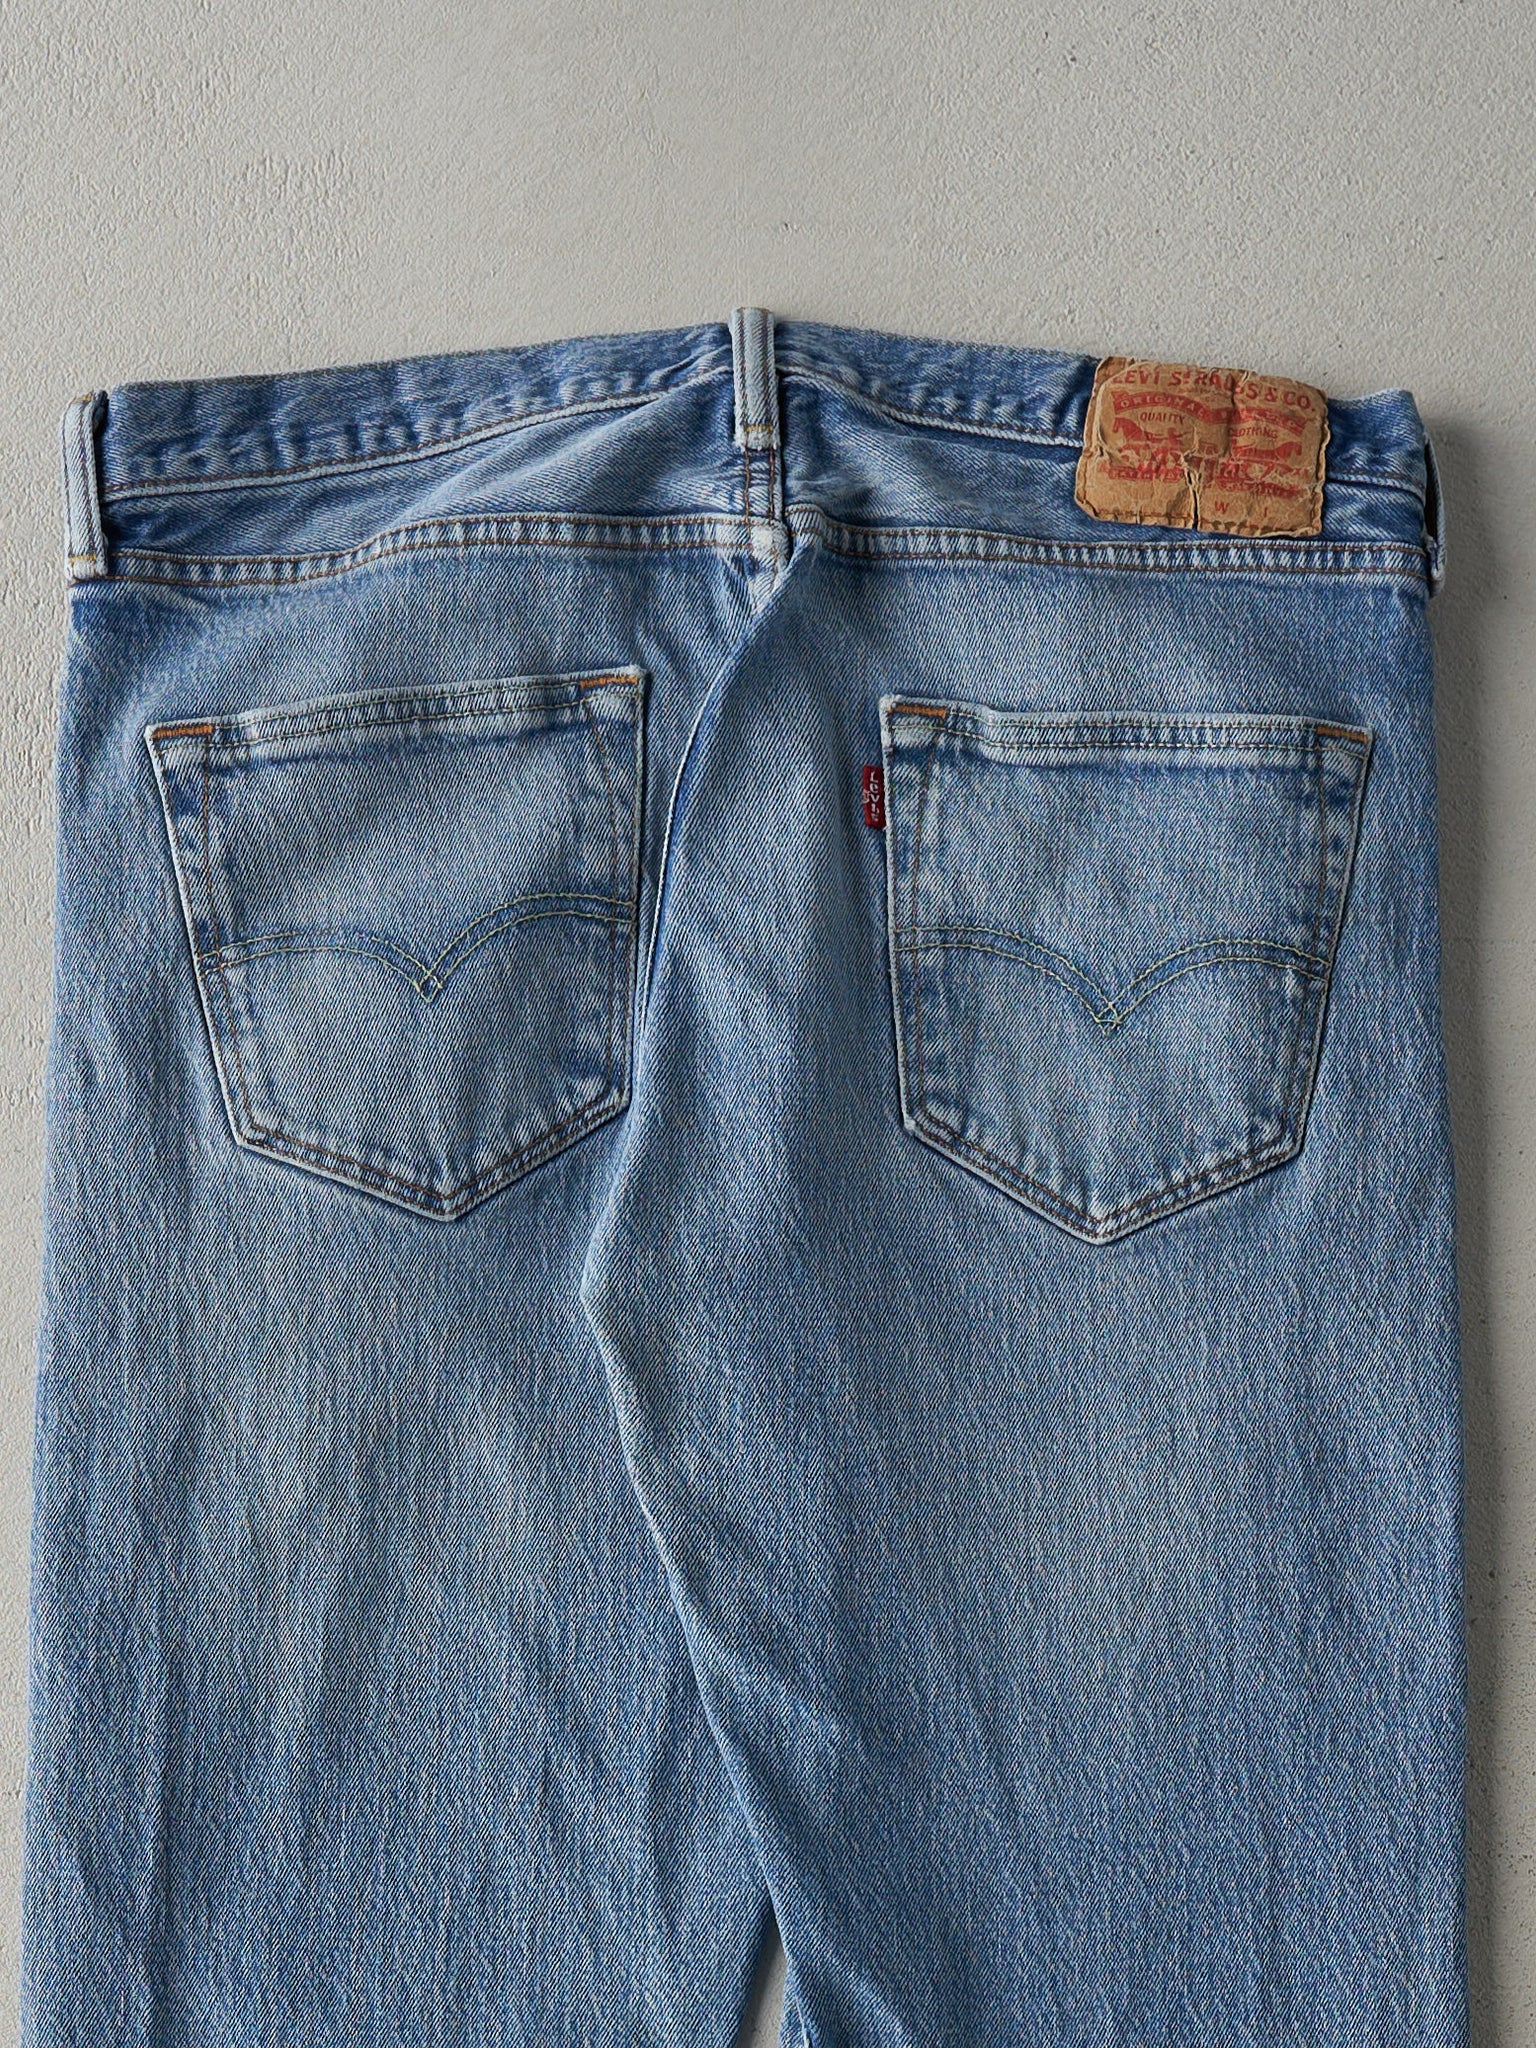 Vintage Y2K Light Wash Levi's 501s Jeans (34x31.5)